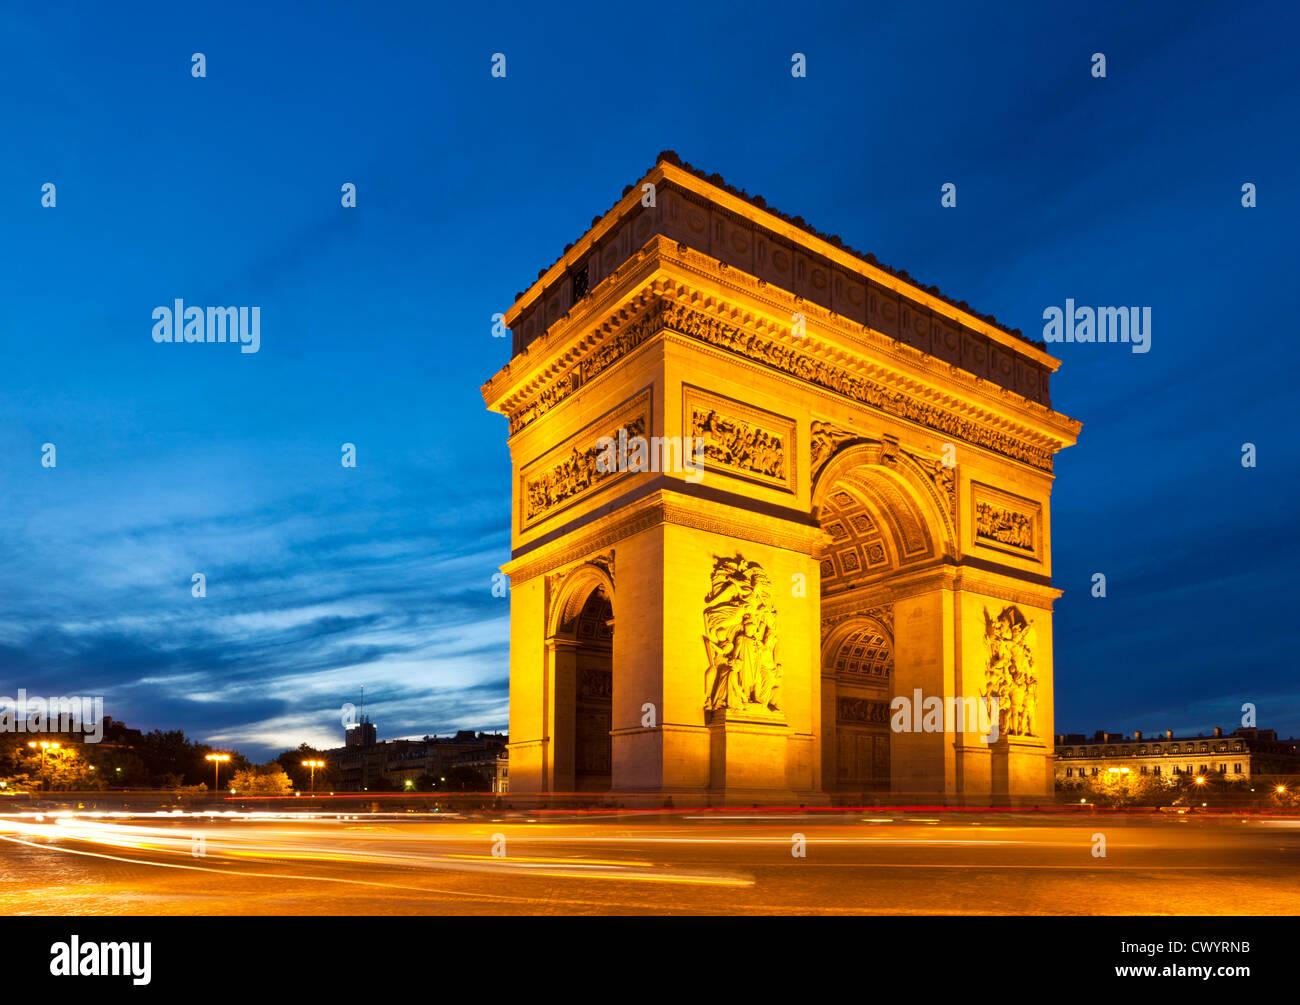 Semaforo sentieri intorno a Napoleone Arc de Triomphe Place Charles de Gaulle CHAMPS ELYSEES Parigi Francia EU Europe Foto Stock